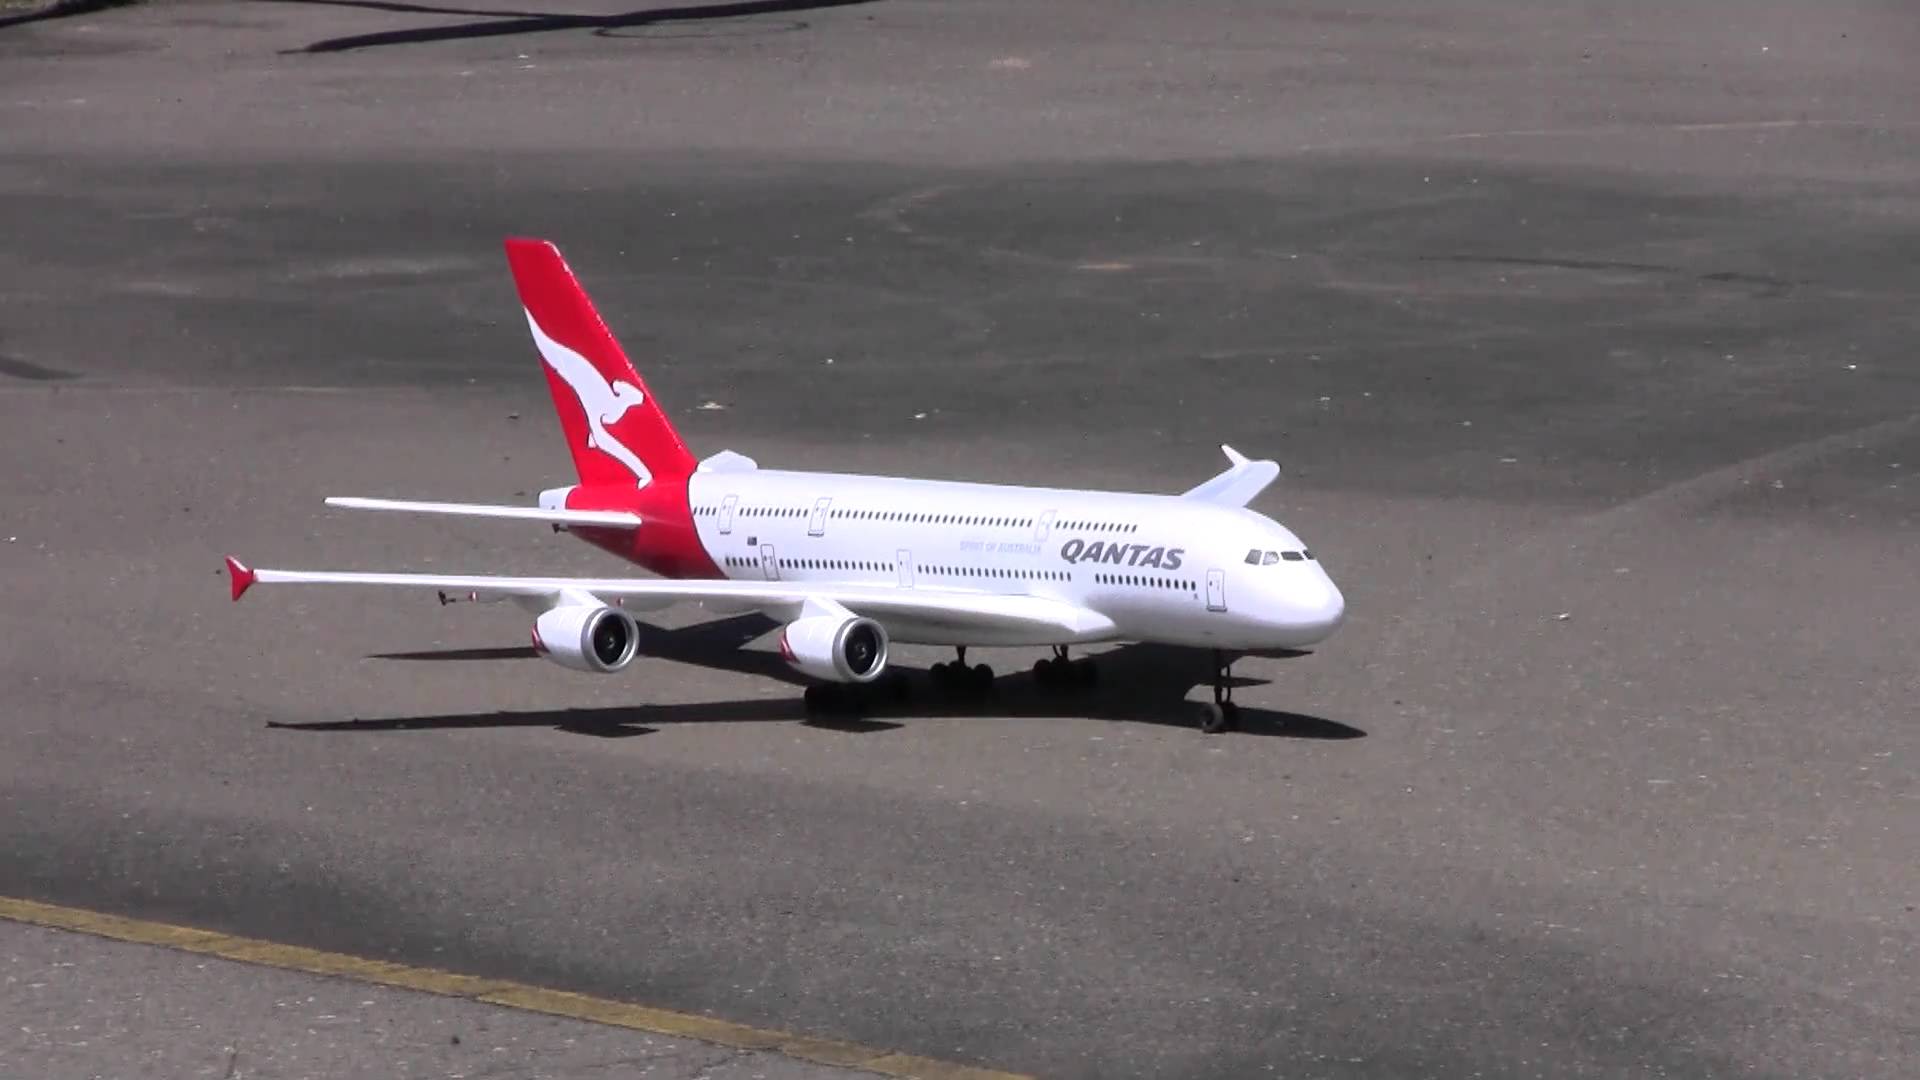 RC Model Qantas A380 Airbus - YouTube